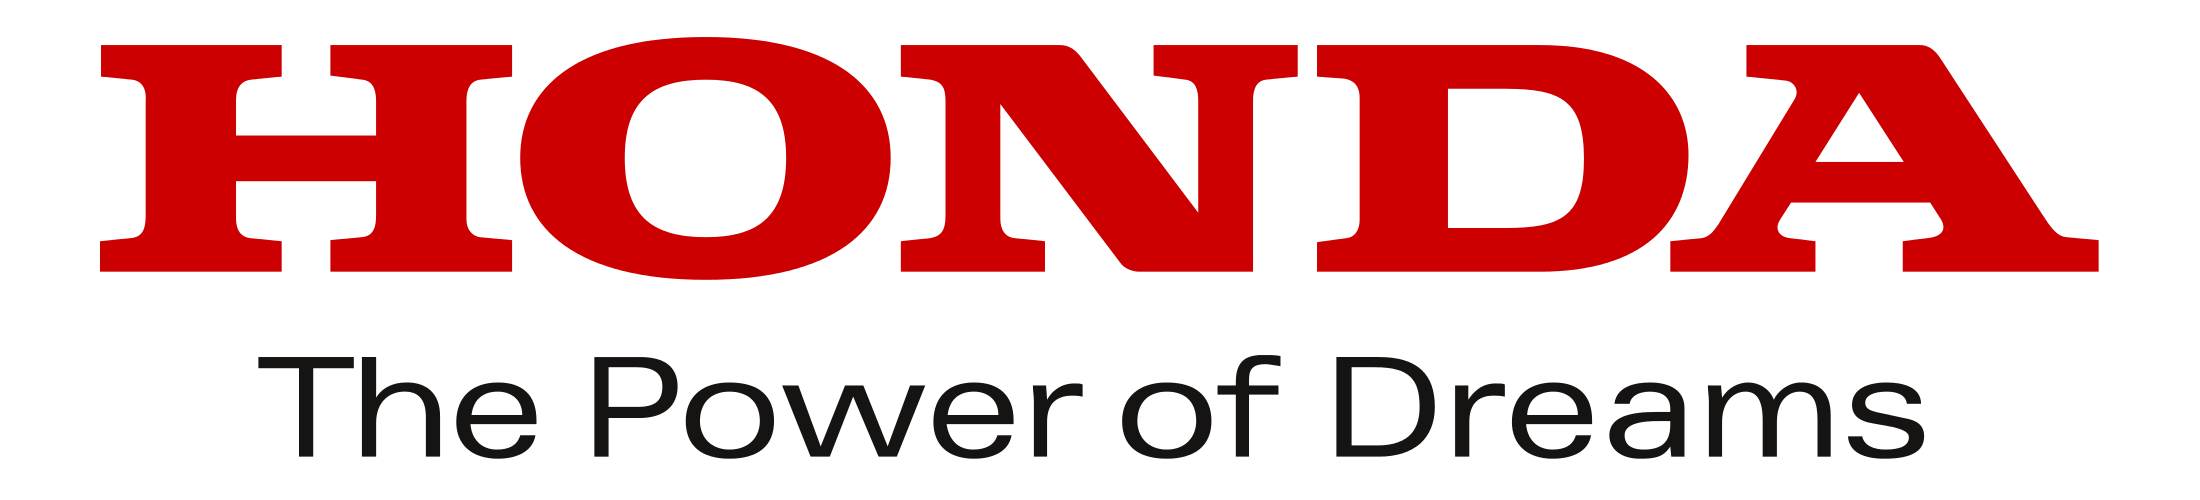 honda logo the power of dreams png